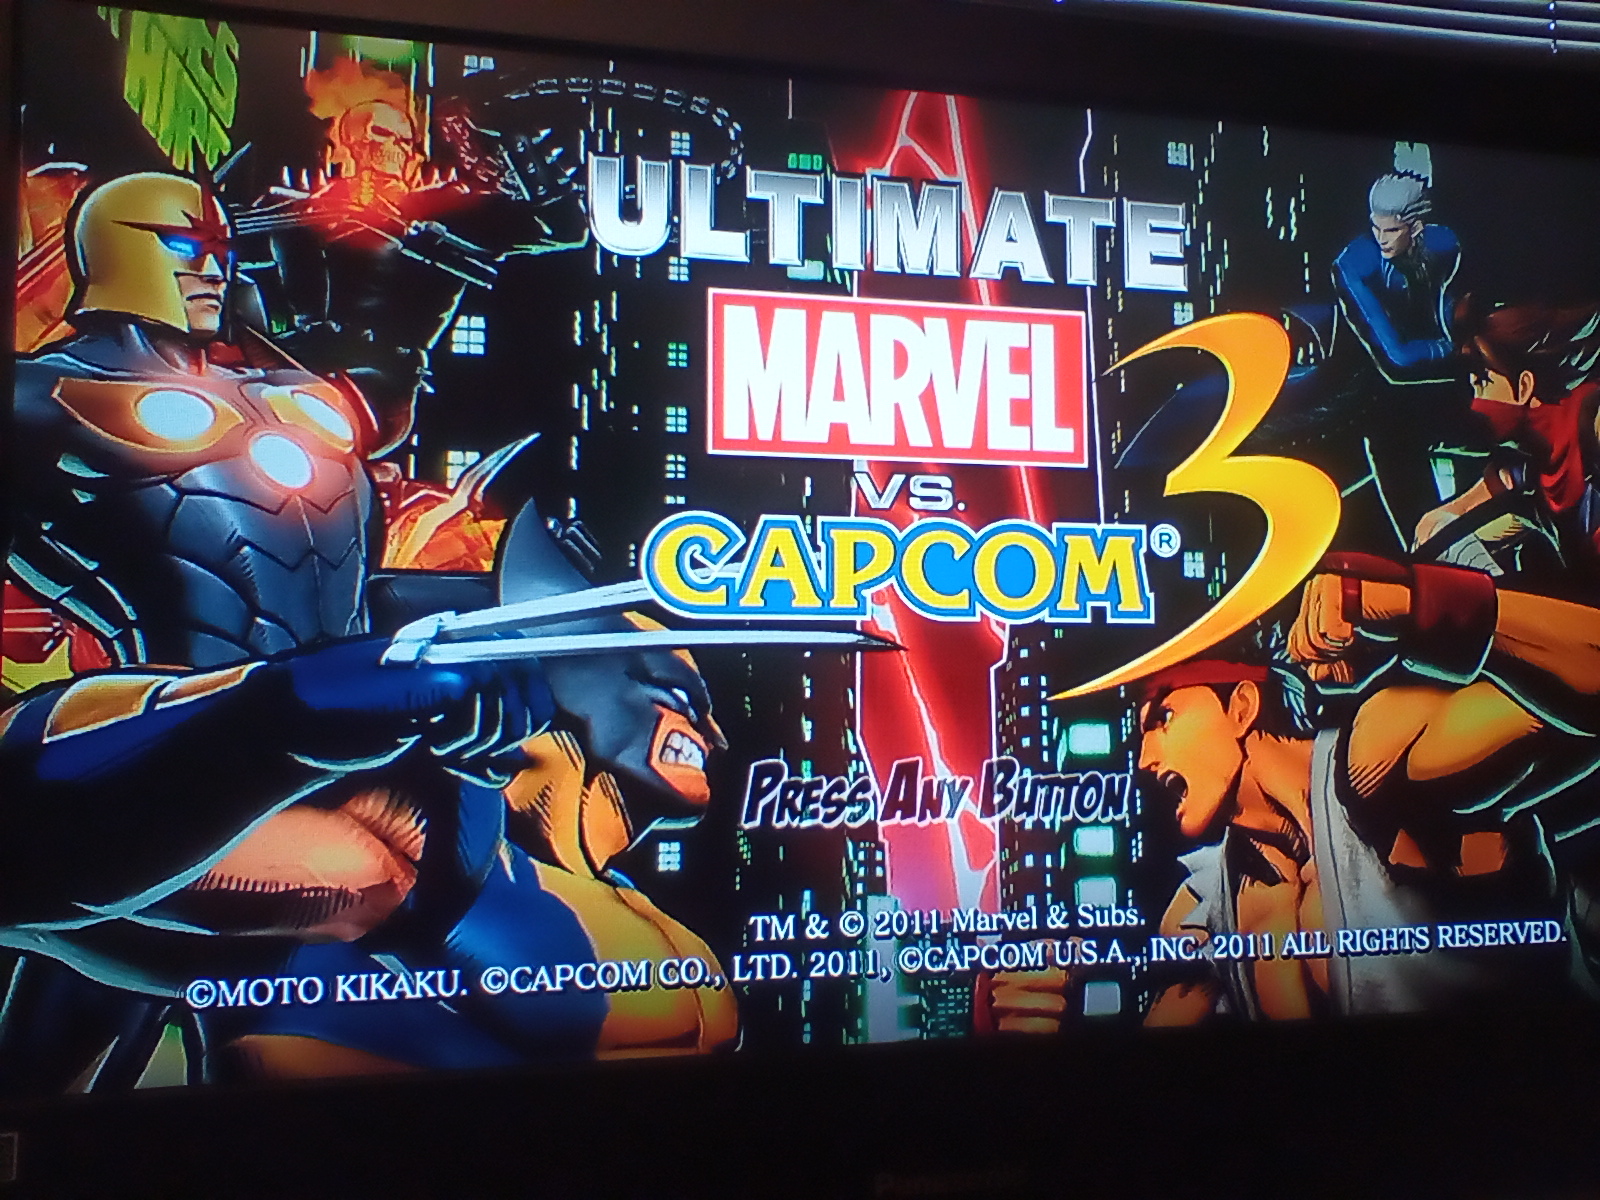 JML101582: Ultimate Marvel vs. Capcom 3 [Arcade] [Easy] (Playstation 3) 222,318 points on 2020-04-05 15:28:04